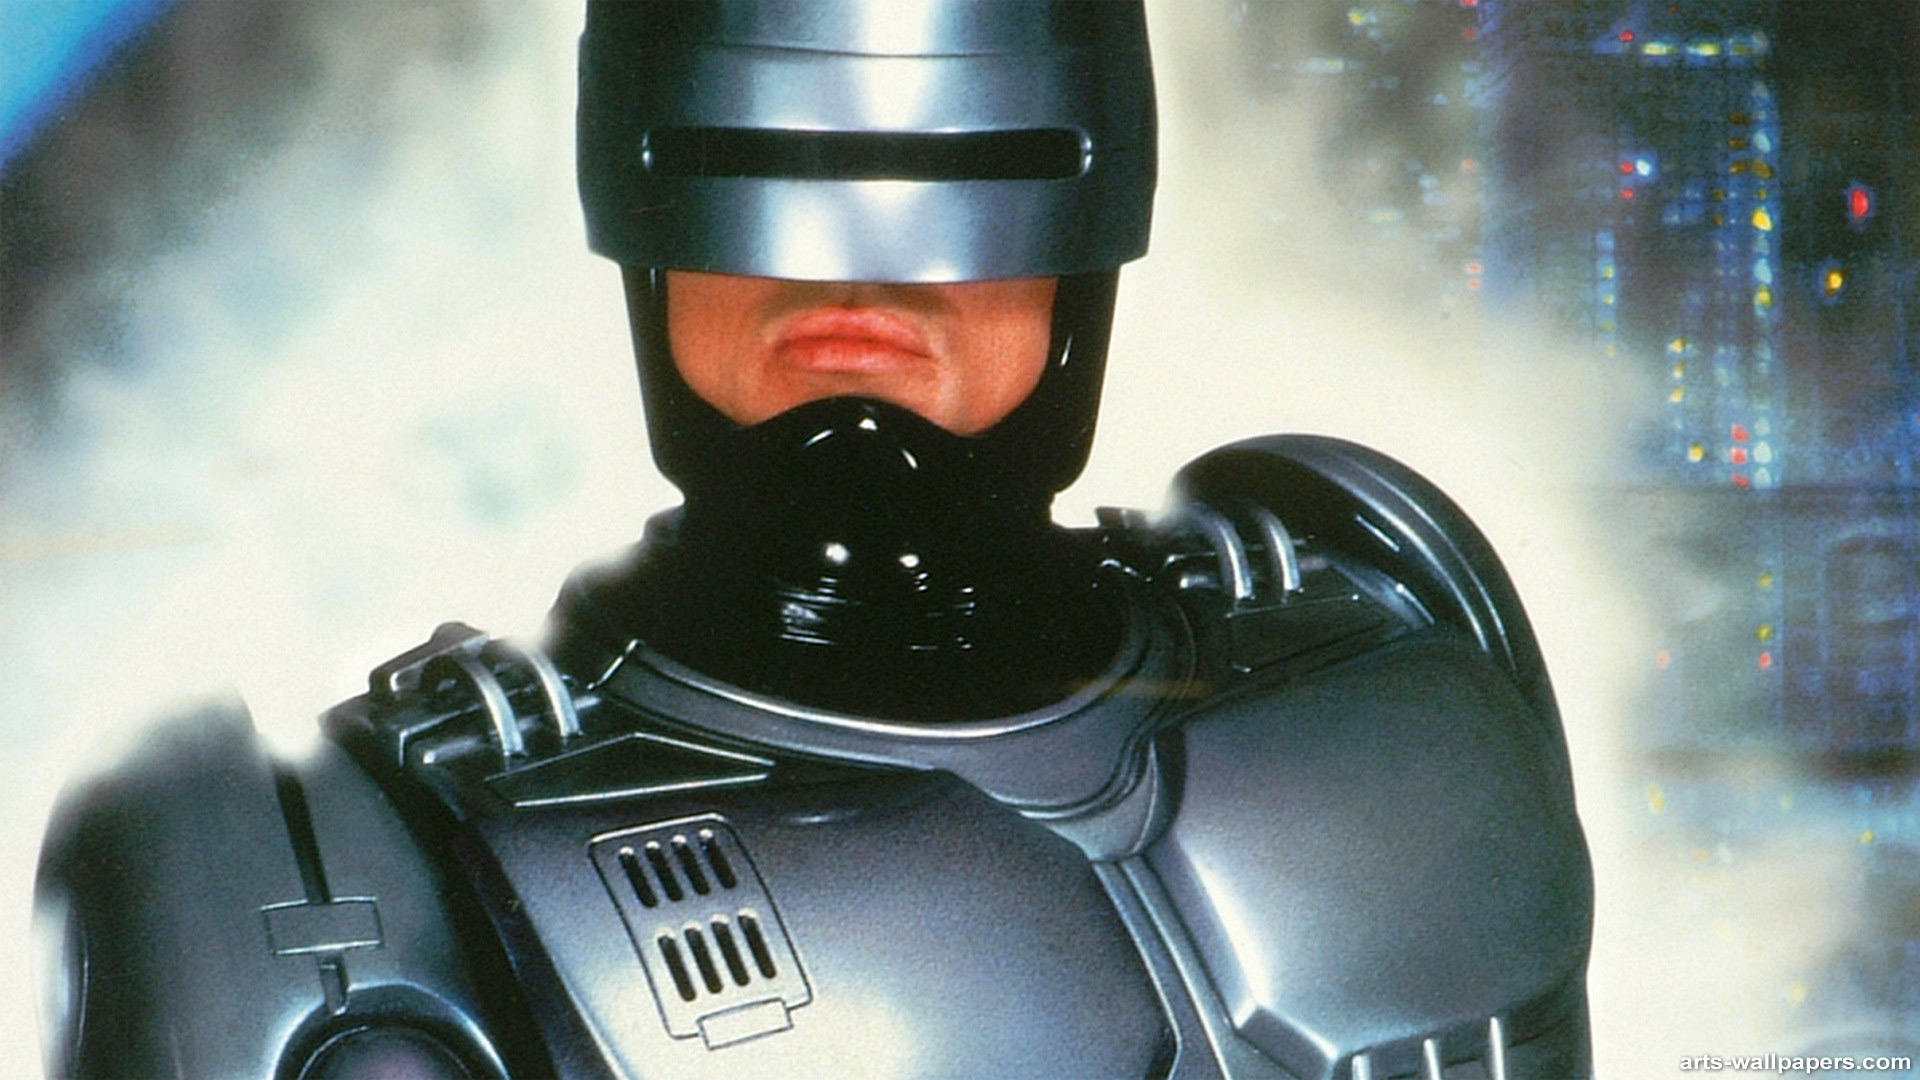 302227 Bild herunterladen filme, robocop (1987), robocop - Hintergrundbilder und Bildschirmschoner kostenlos